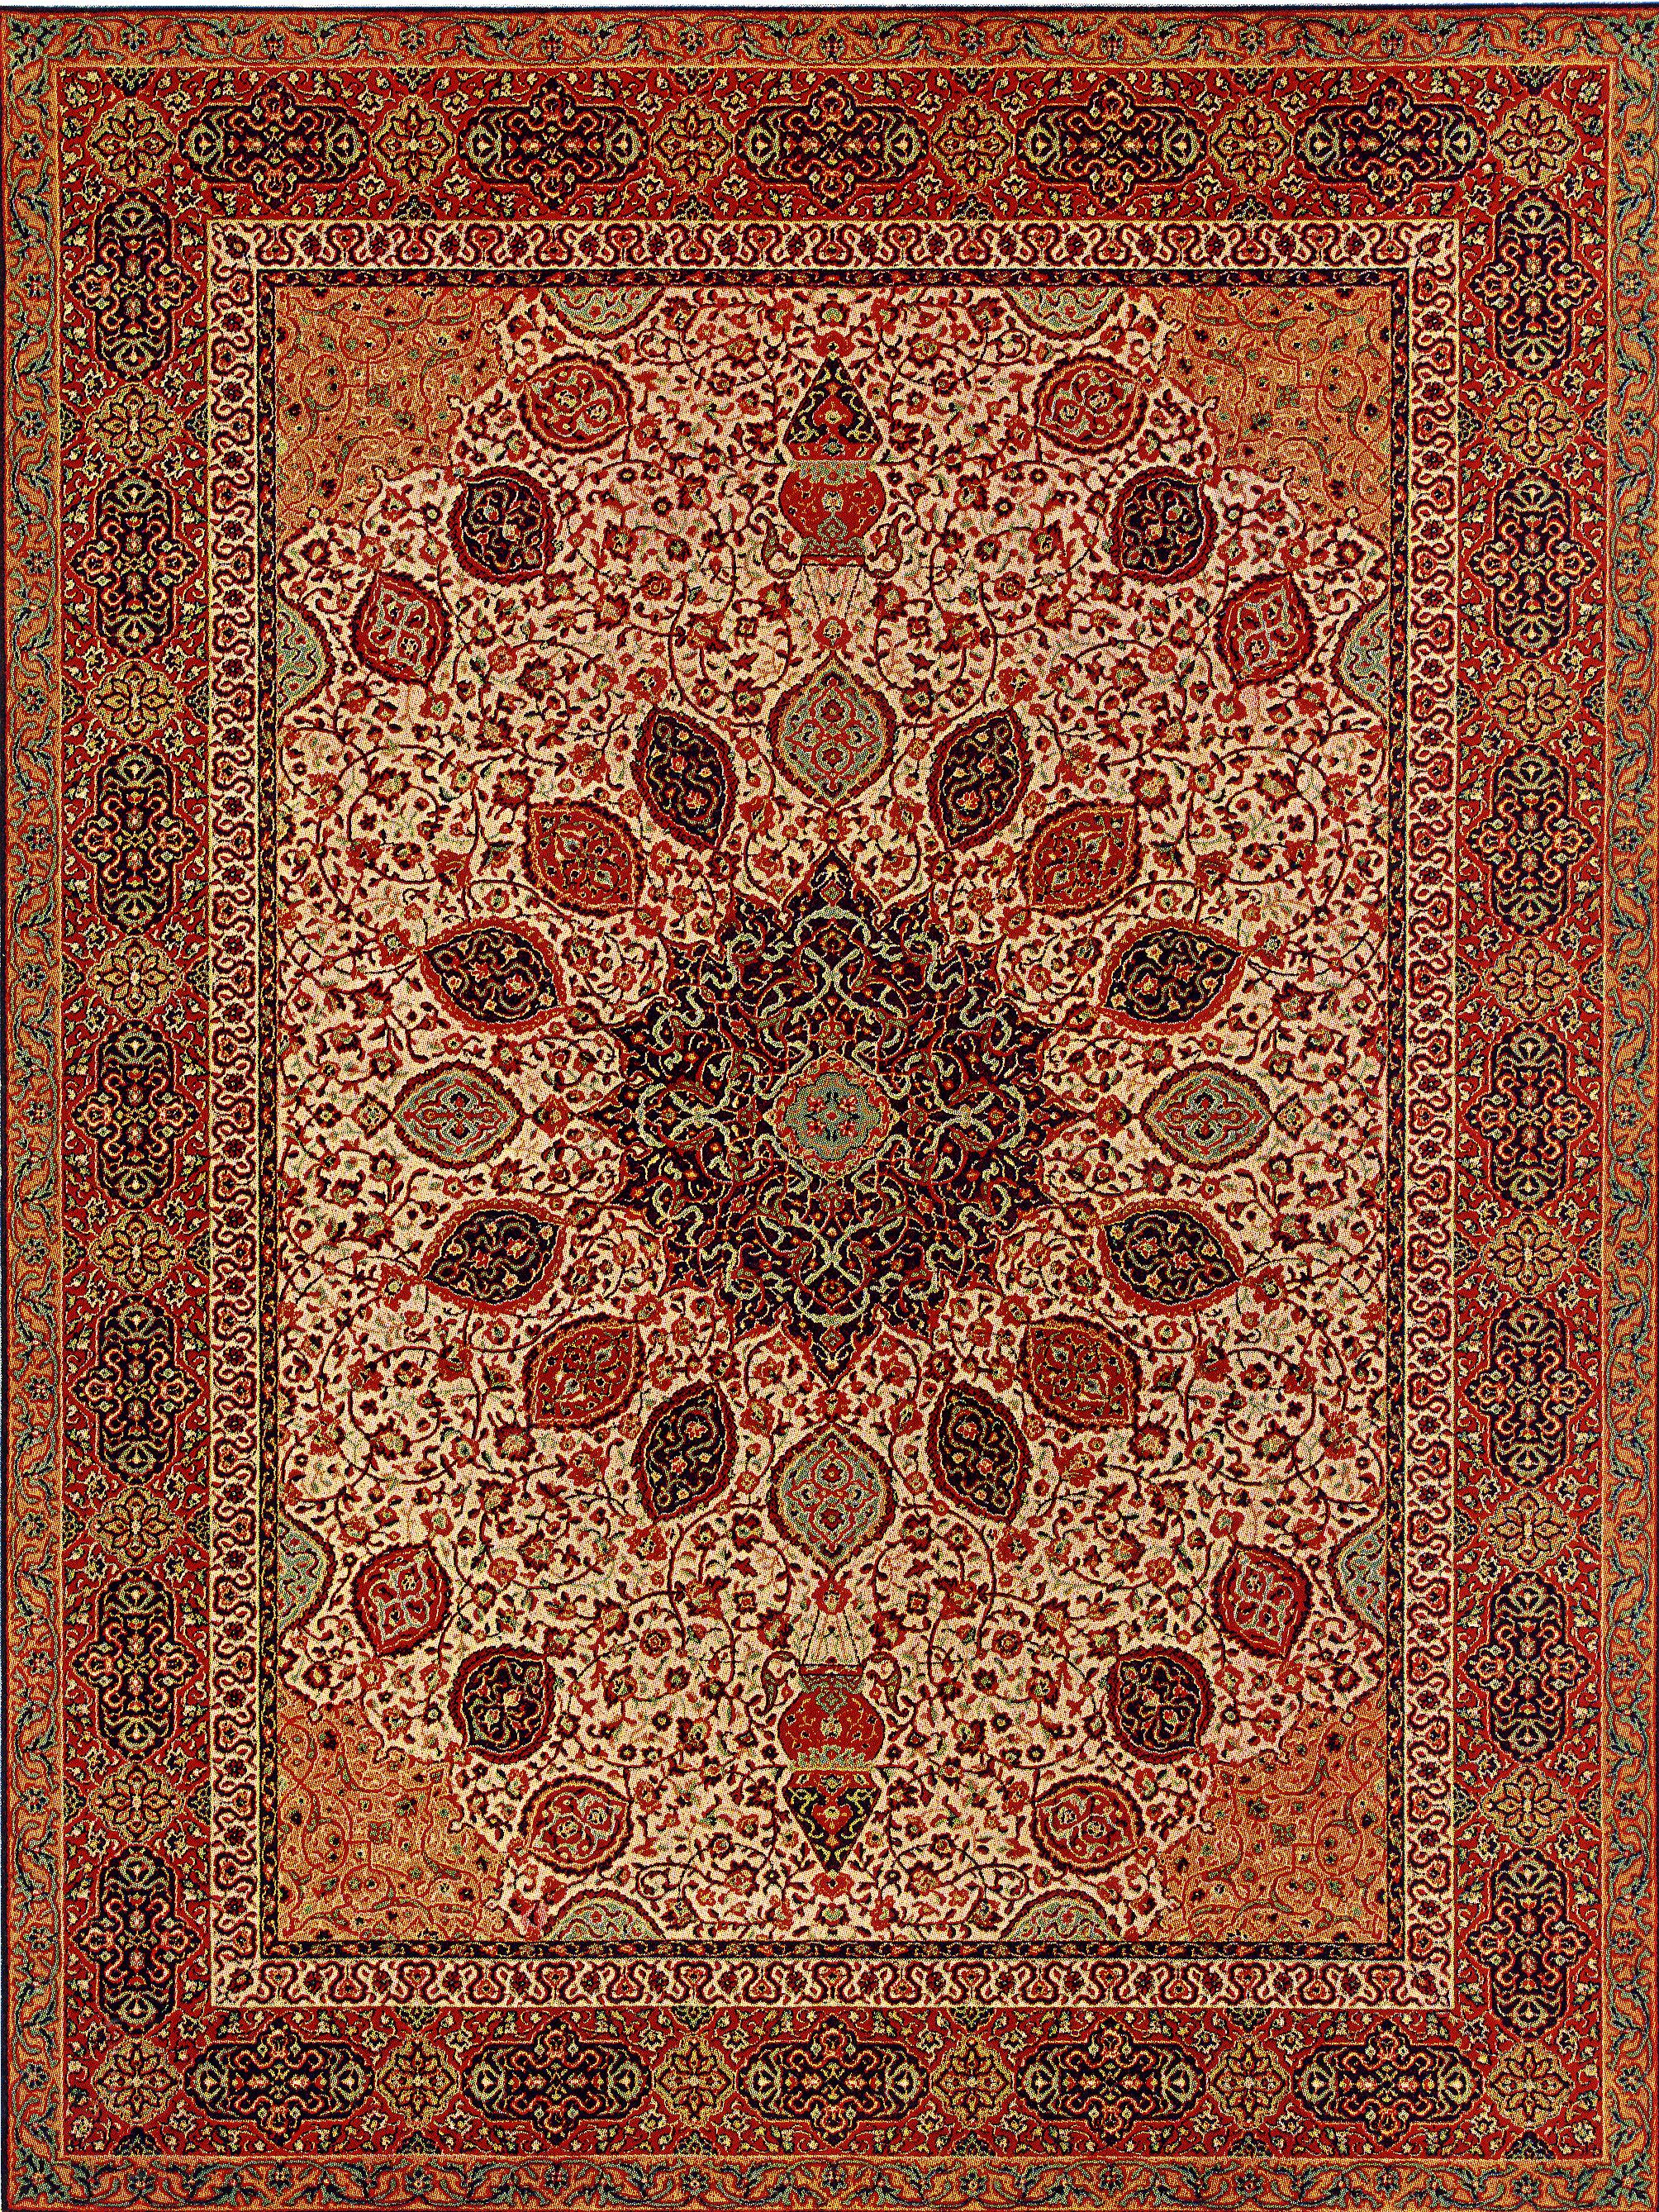 Persian Carpet photo - 2